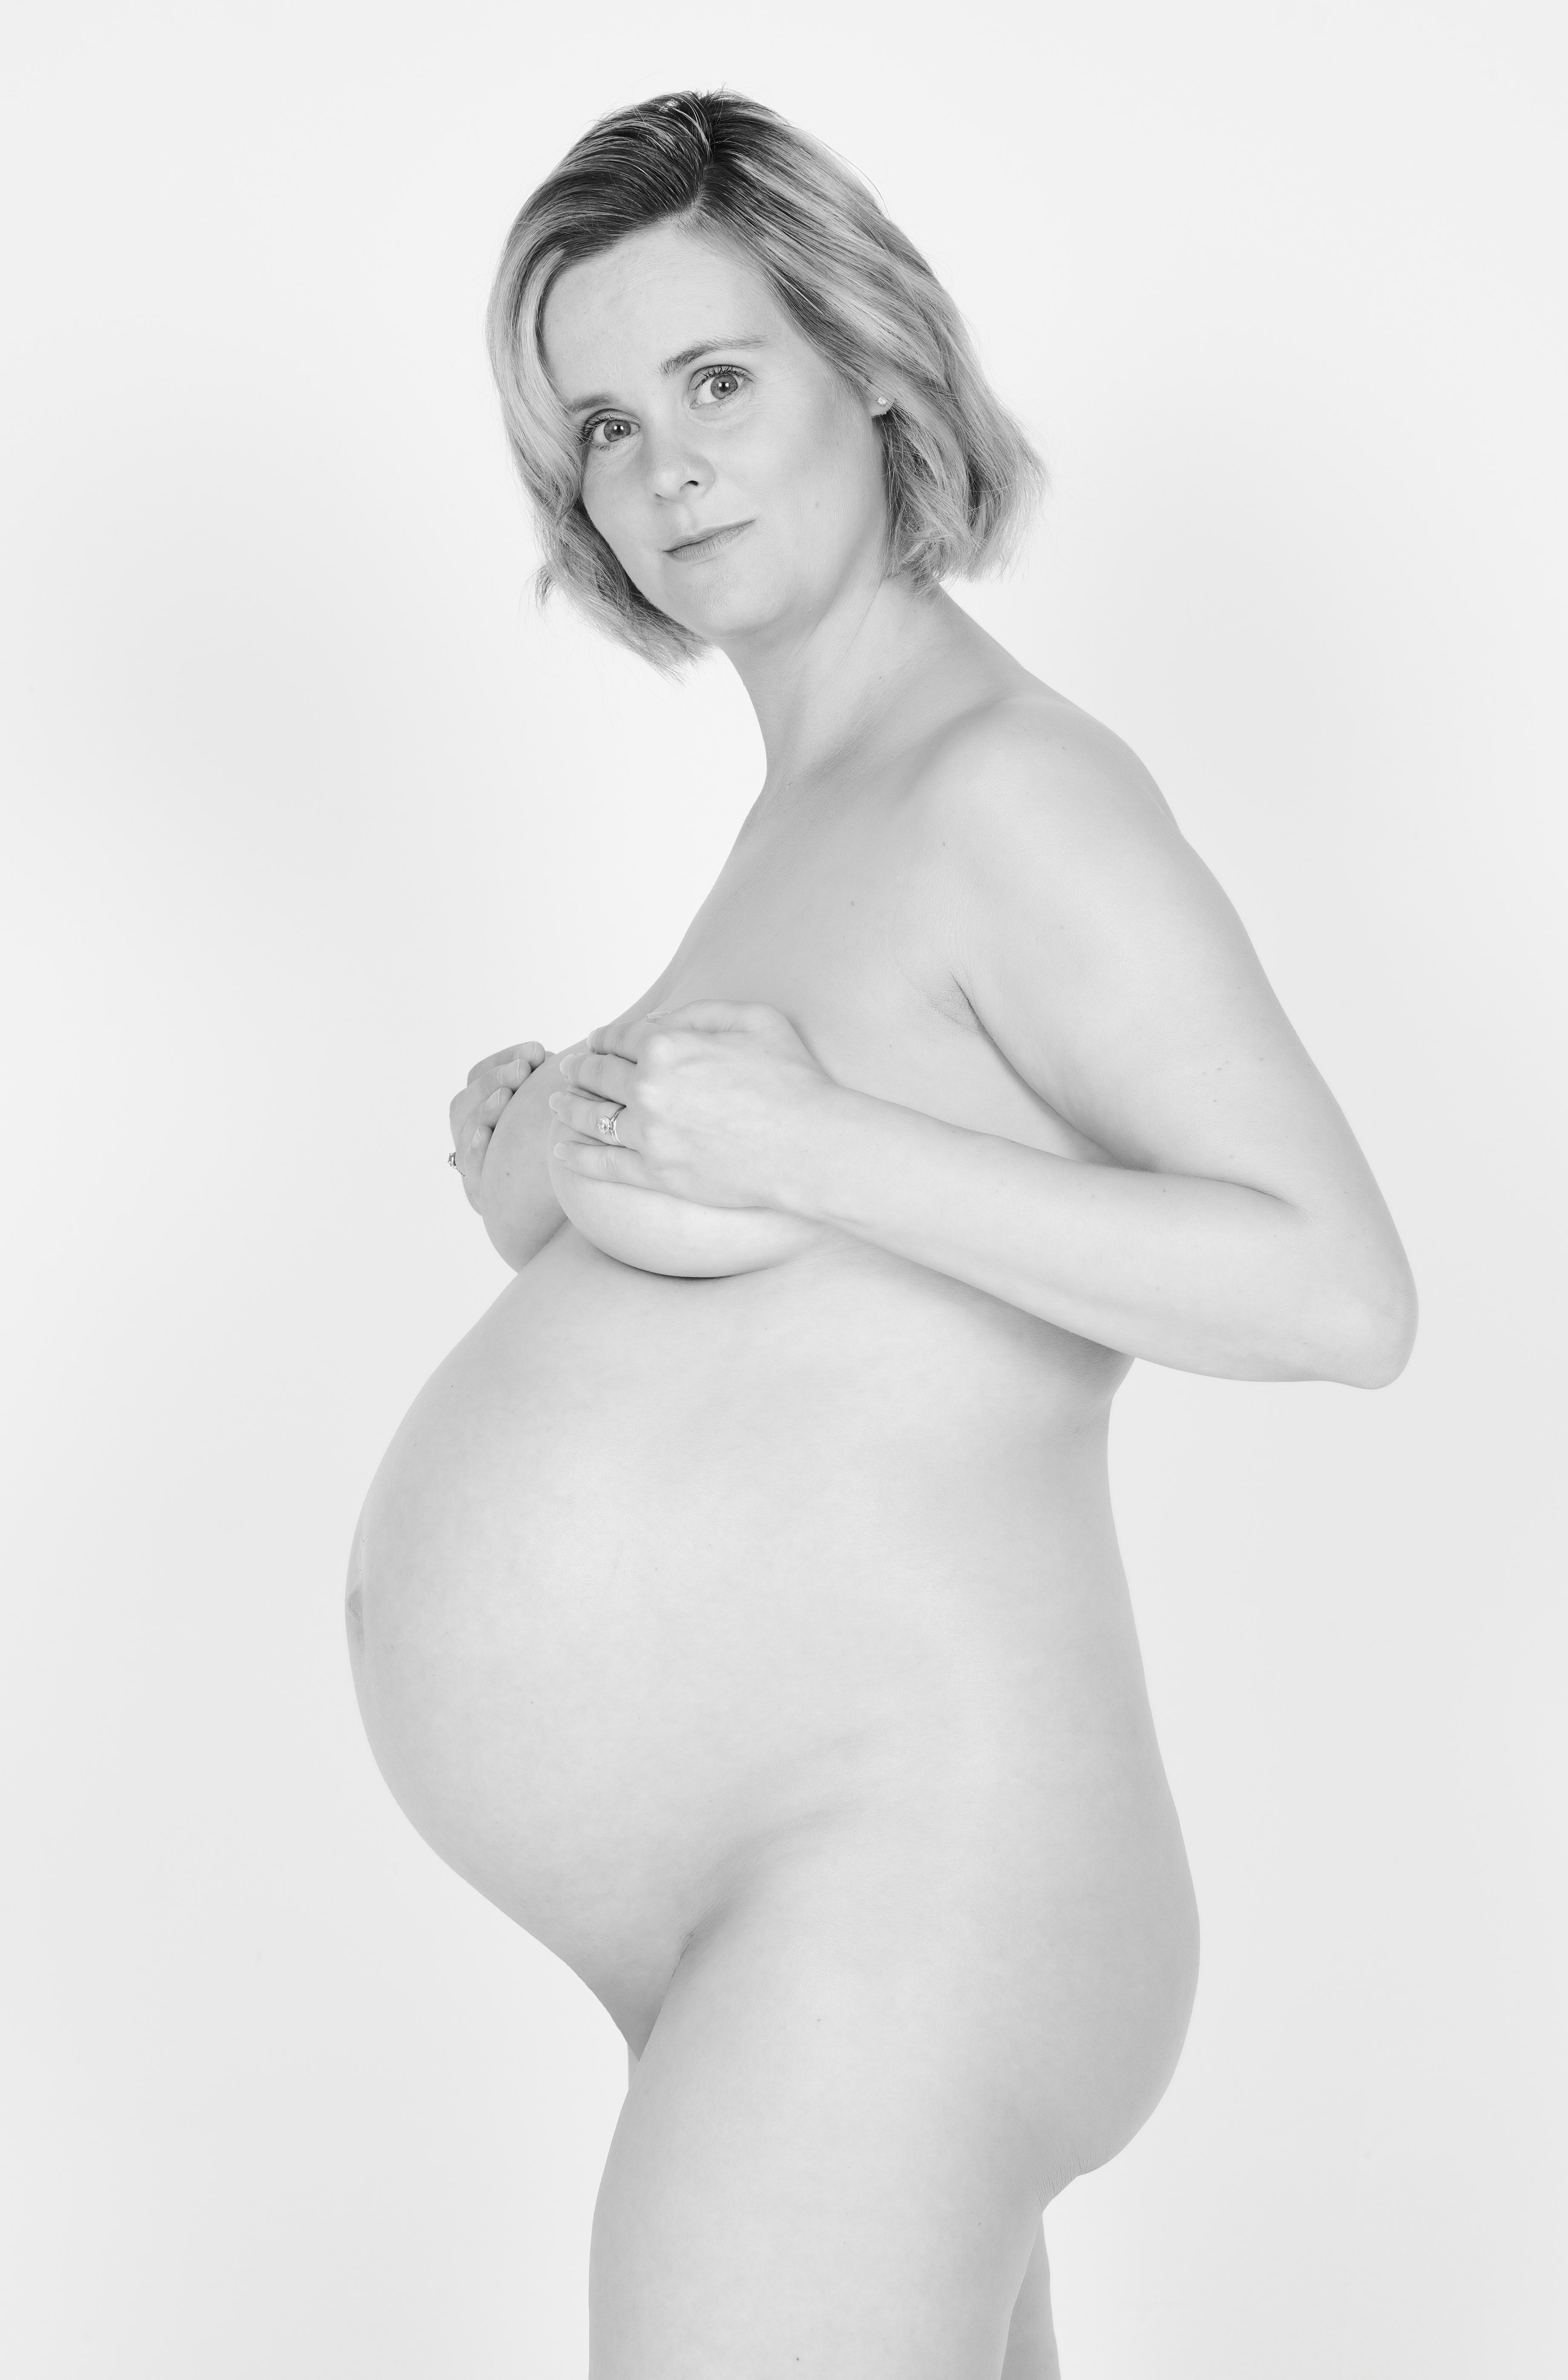 Nude pregnant women art